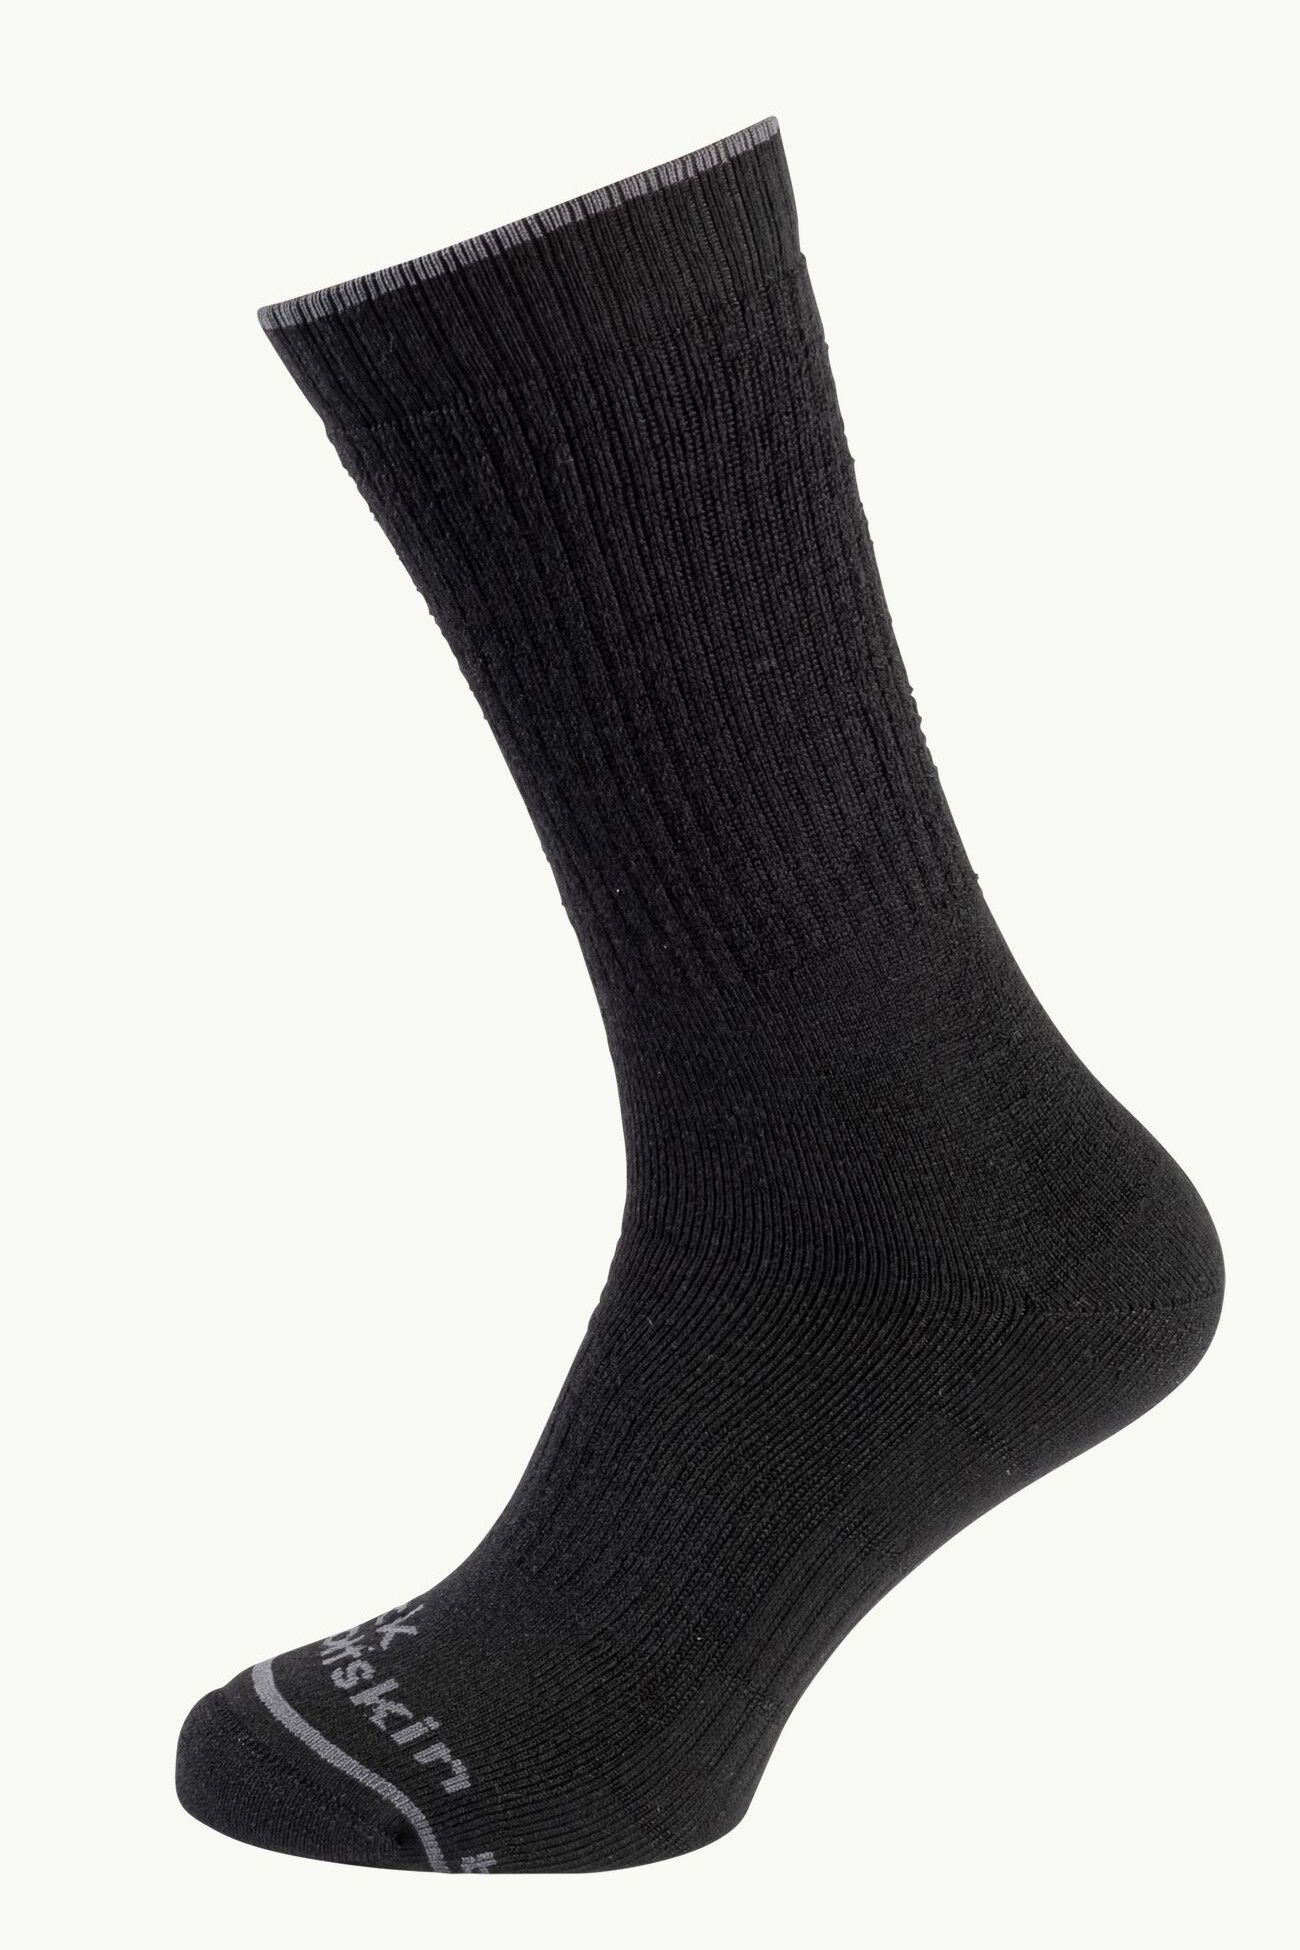 Шкарпетки  Jack Wolfskin TREK MERINO SOCK CL C чорні 1911411-6000 изображение 2